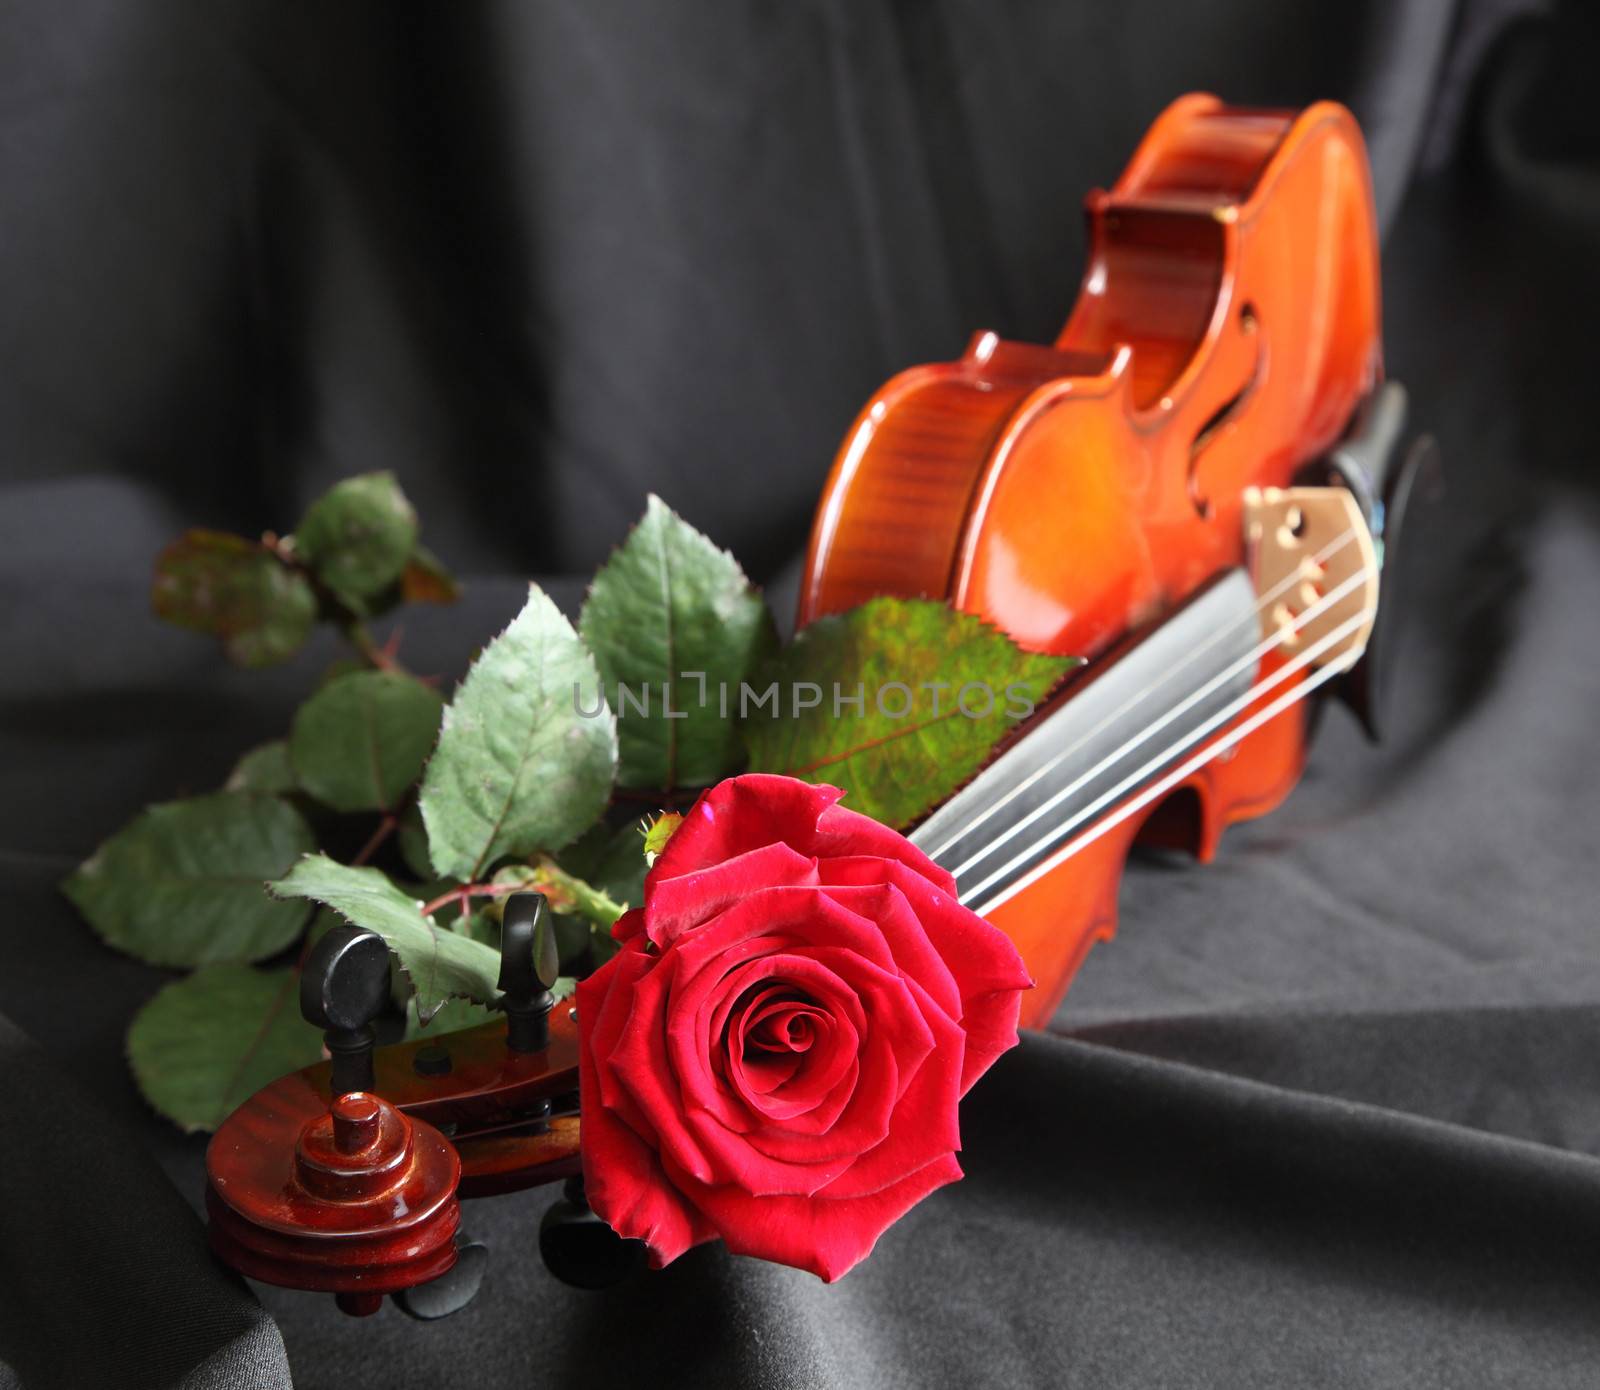 Violin by sagasan